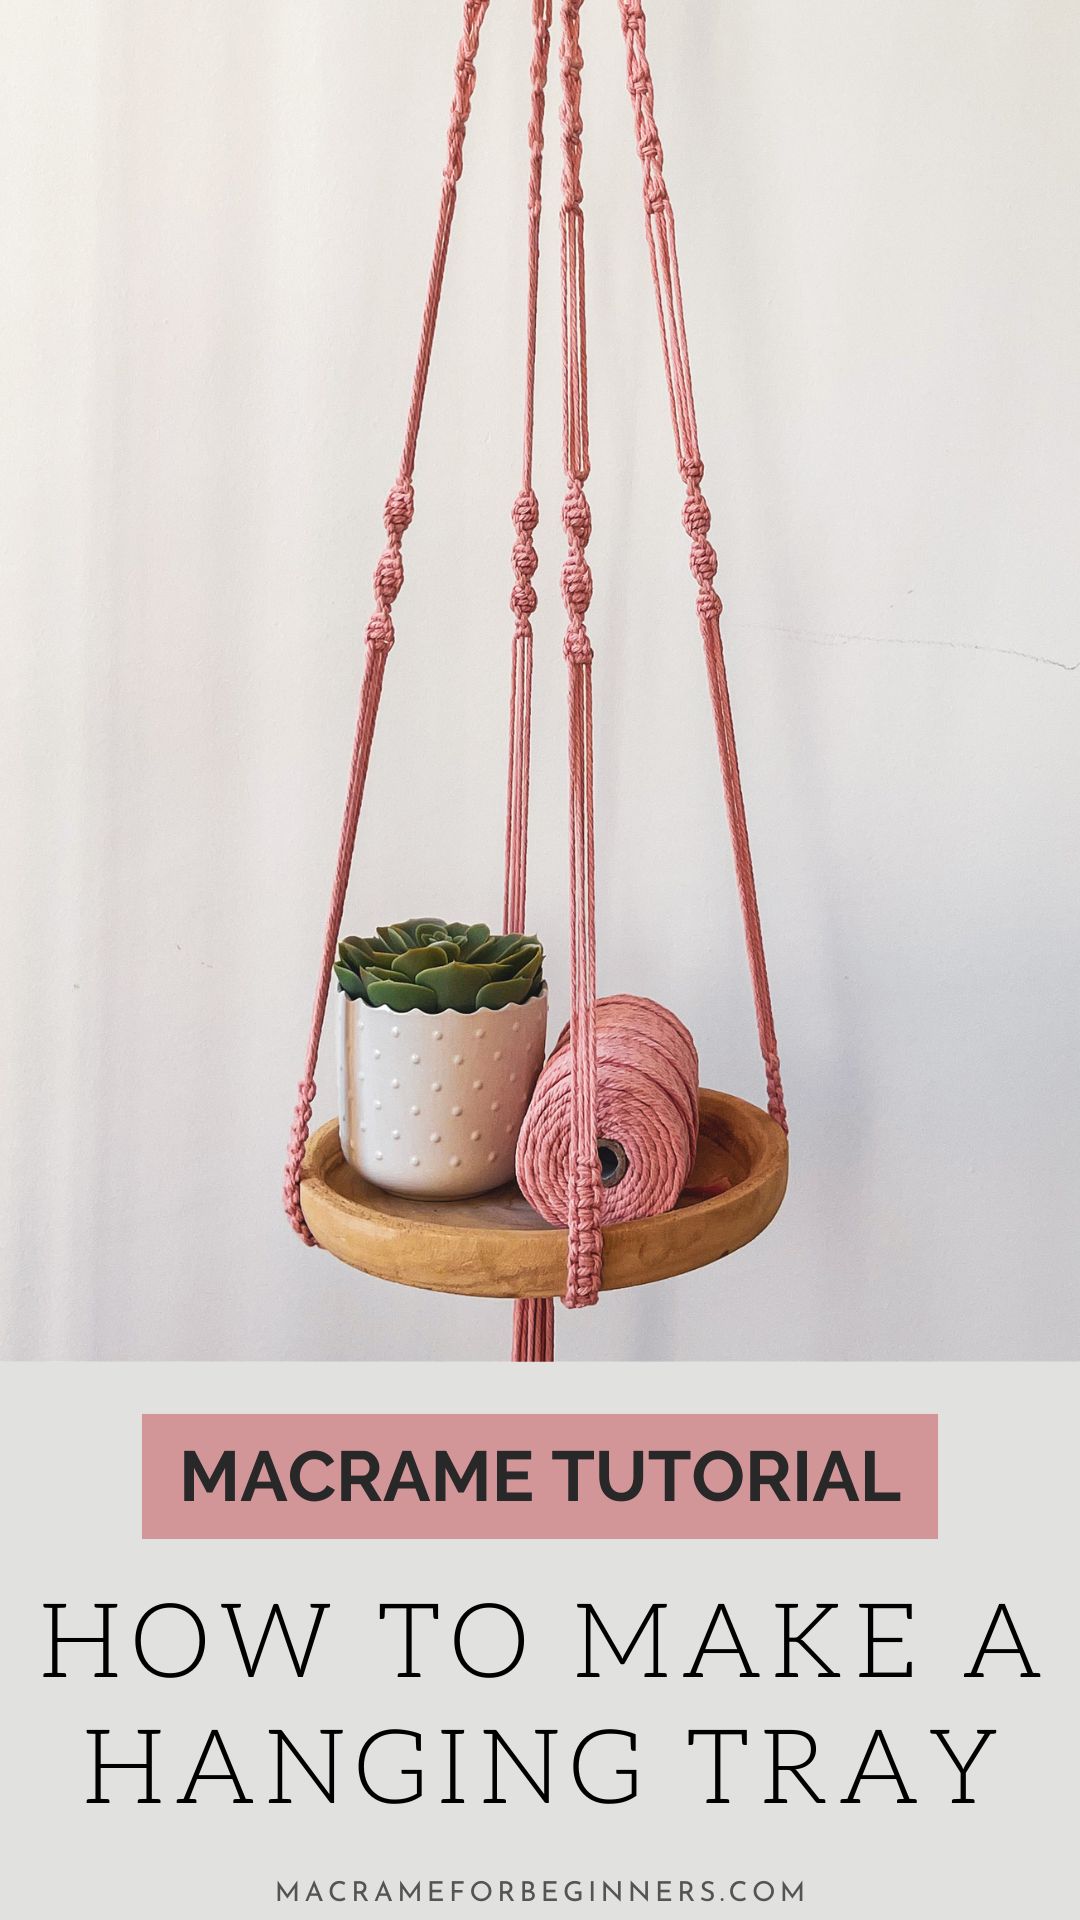 Easy DIY Macrame Hanging Tray Tutorial for Beginners - Macrame for Beginners pattern hanging shelf